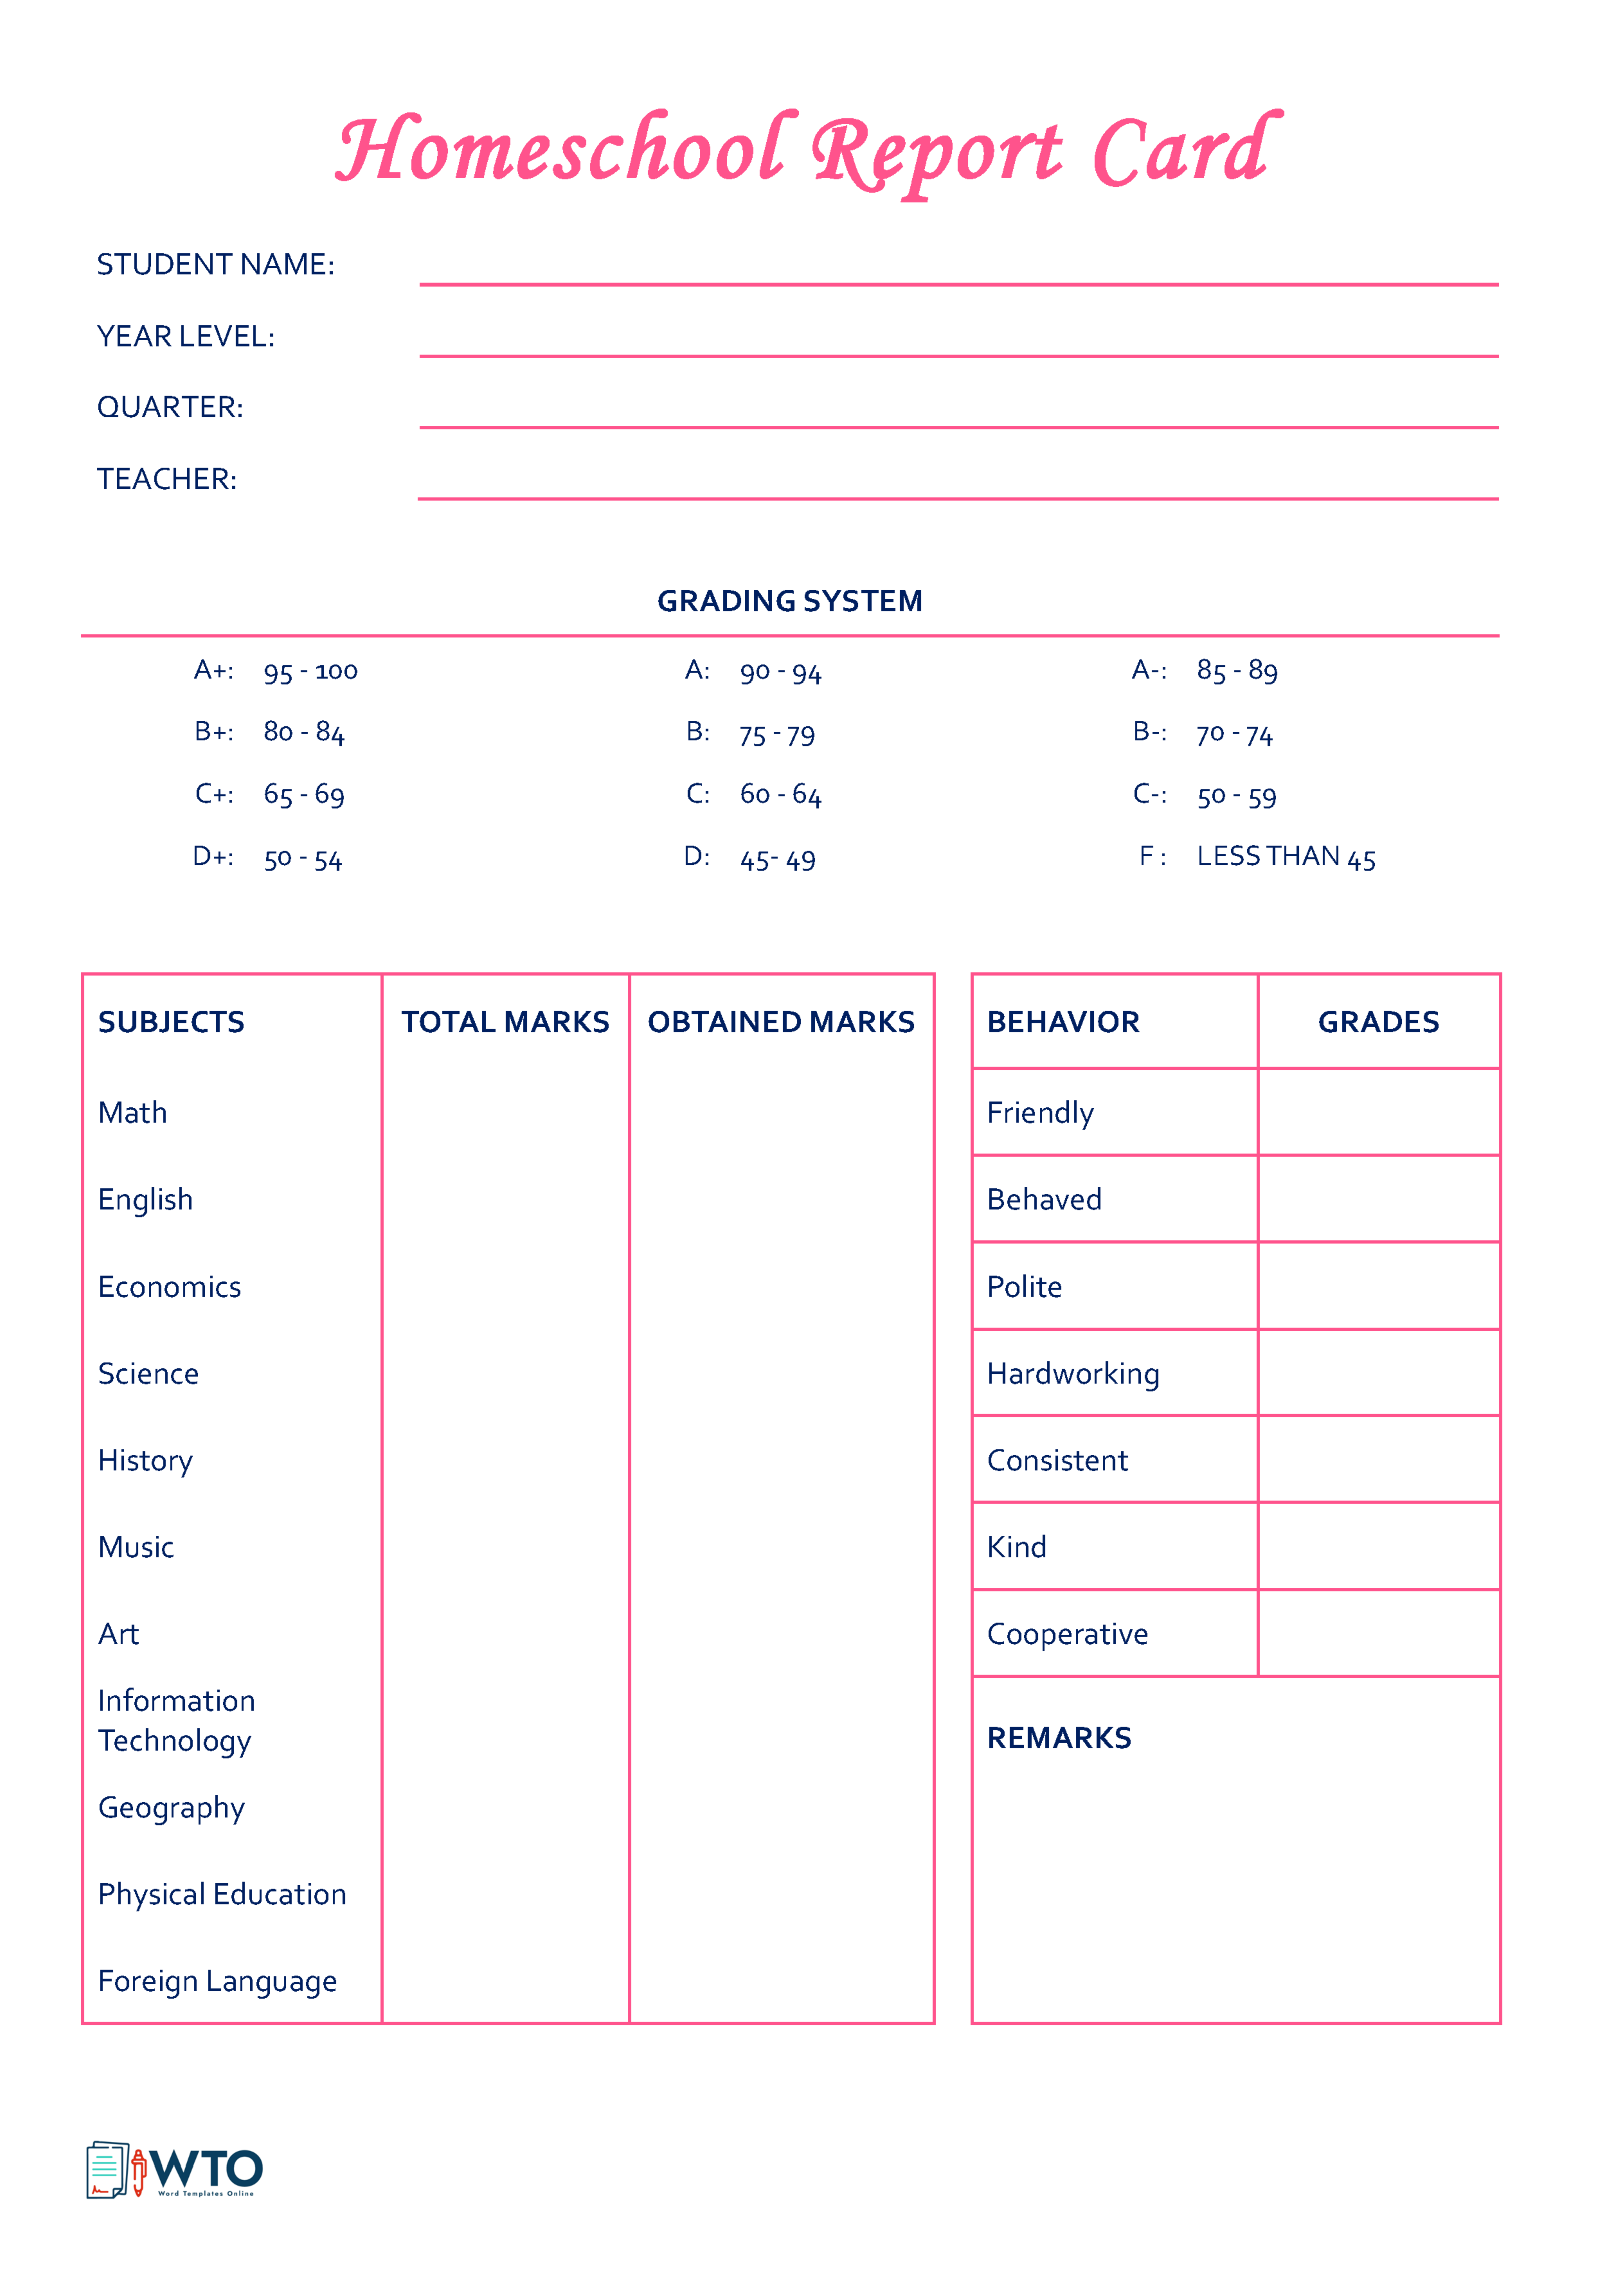 Homeschool Report Card Sample - Free Template